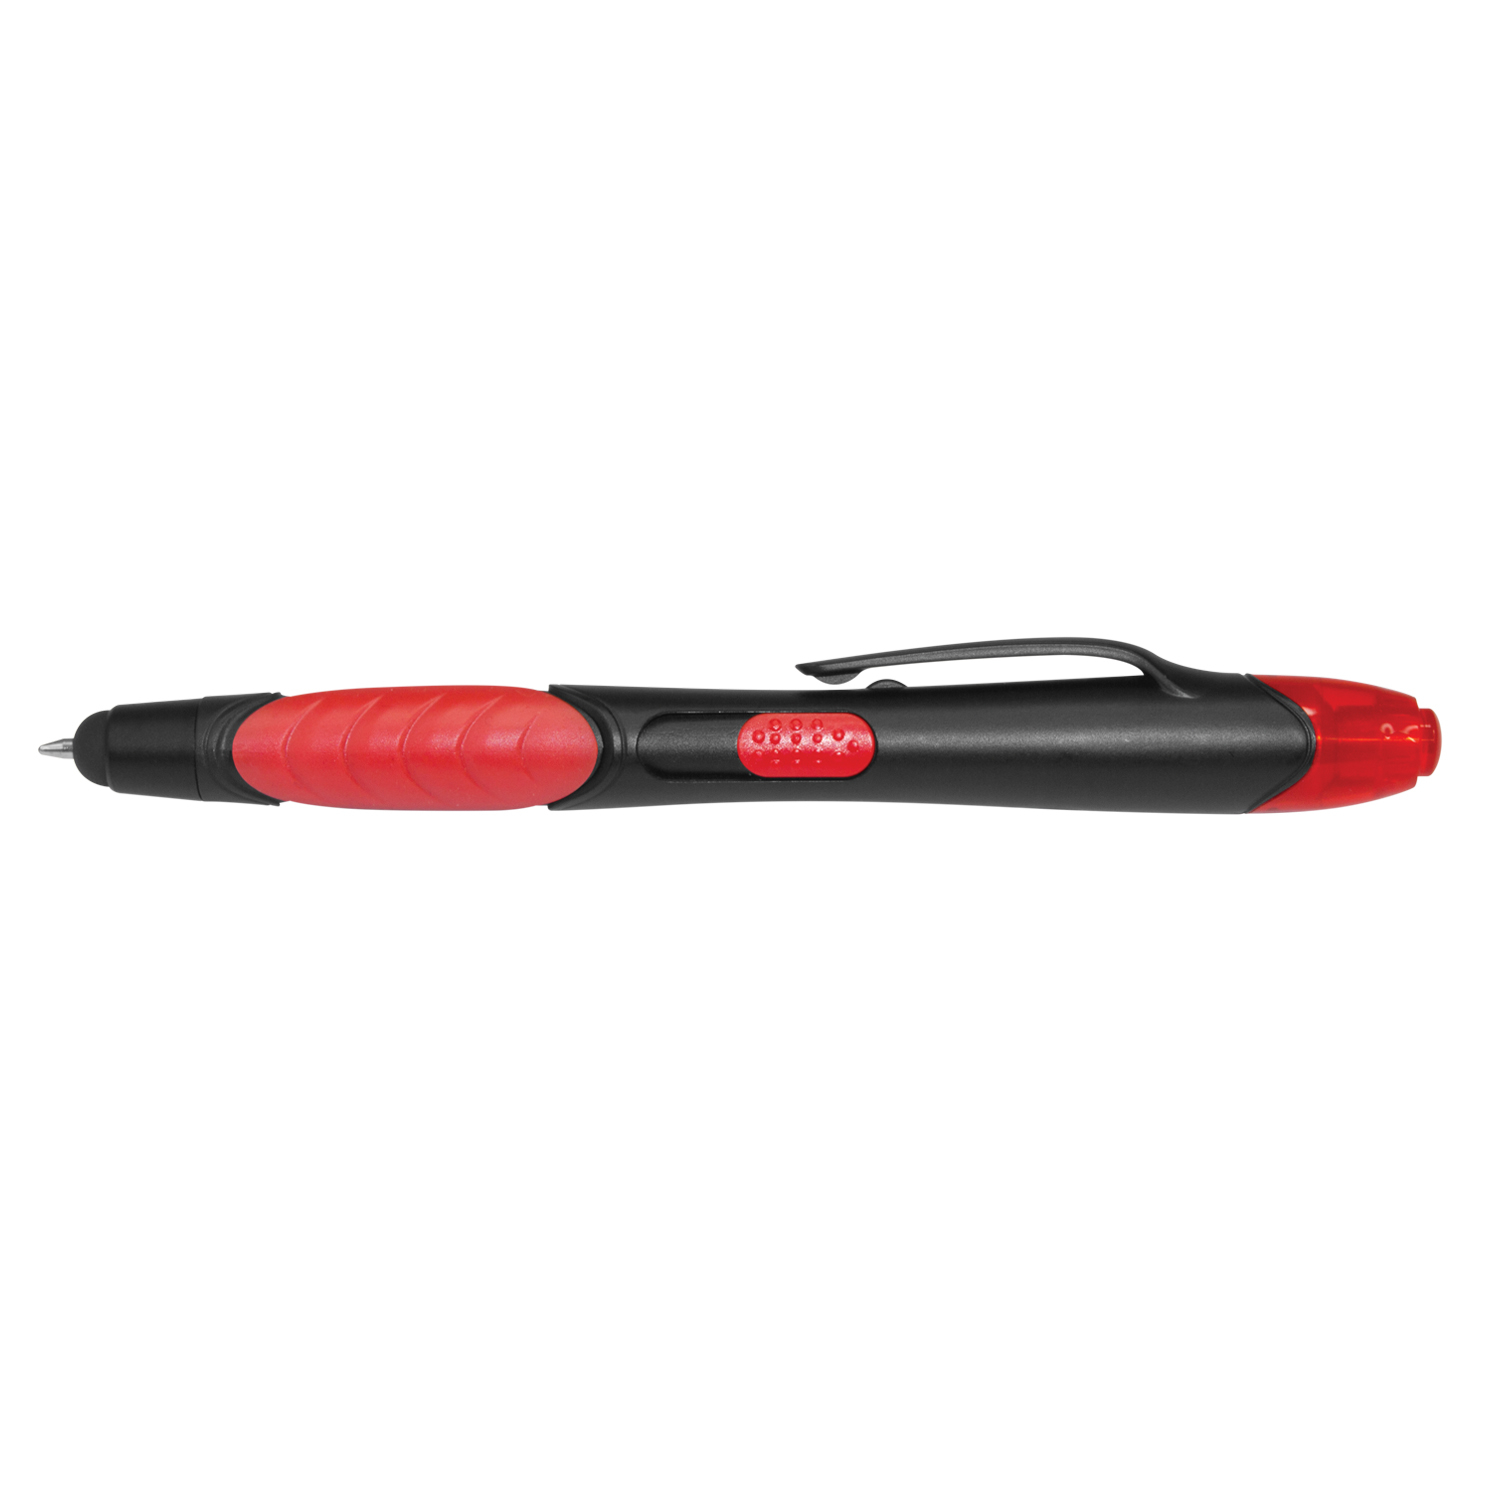 Highlighter Nexus Multi-Function Pen – Coloured Barrel -